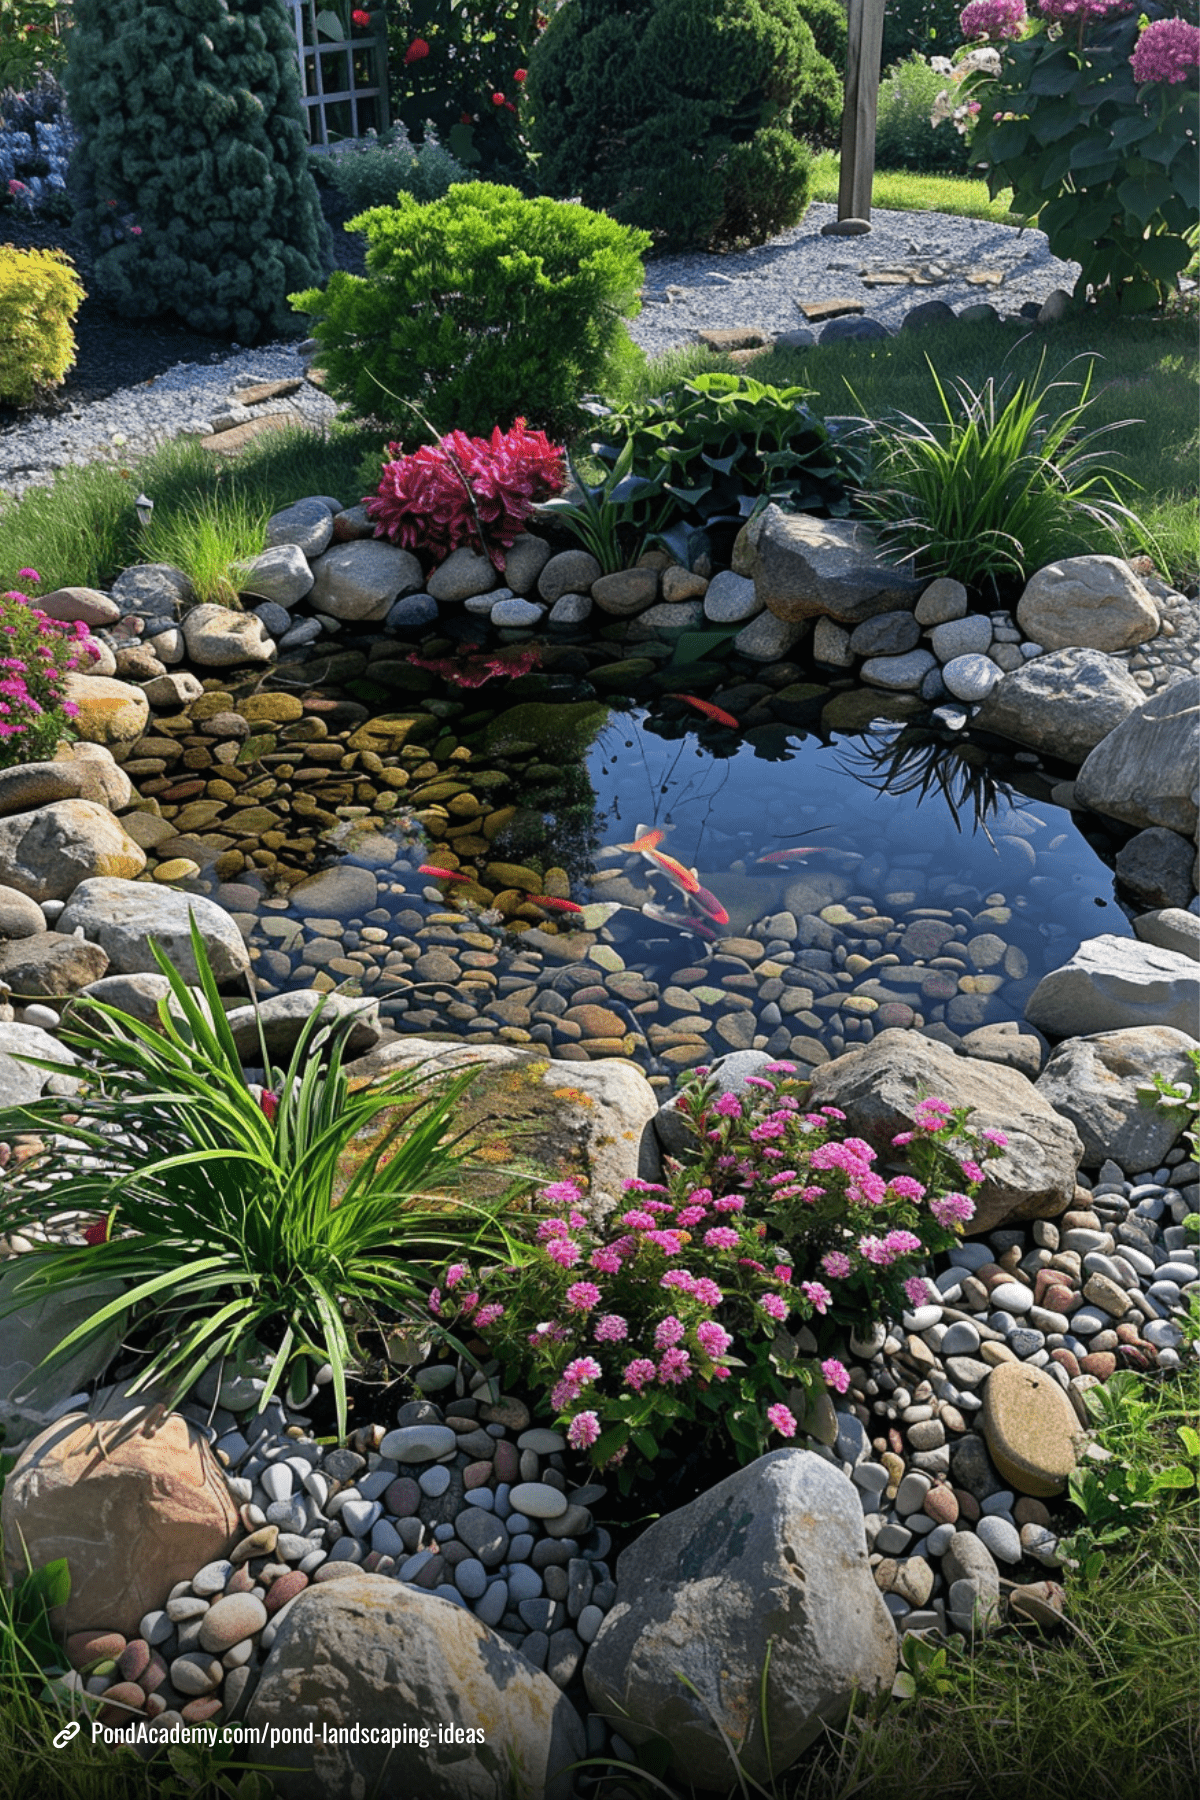 Pond landscaping idea 24